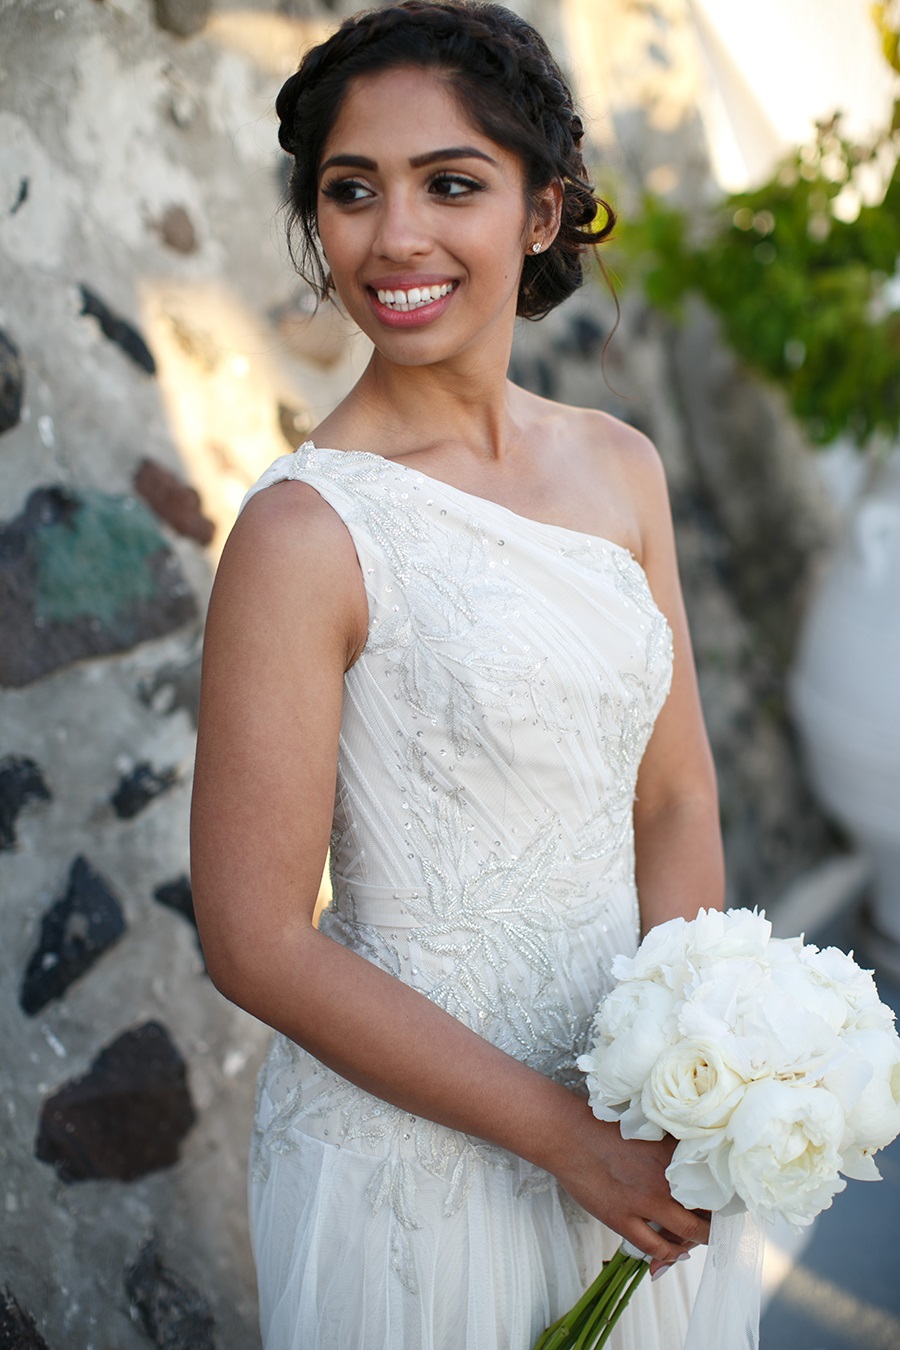 Elegant Santorini bride |Bridal hairstyle